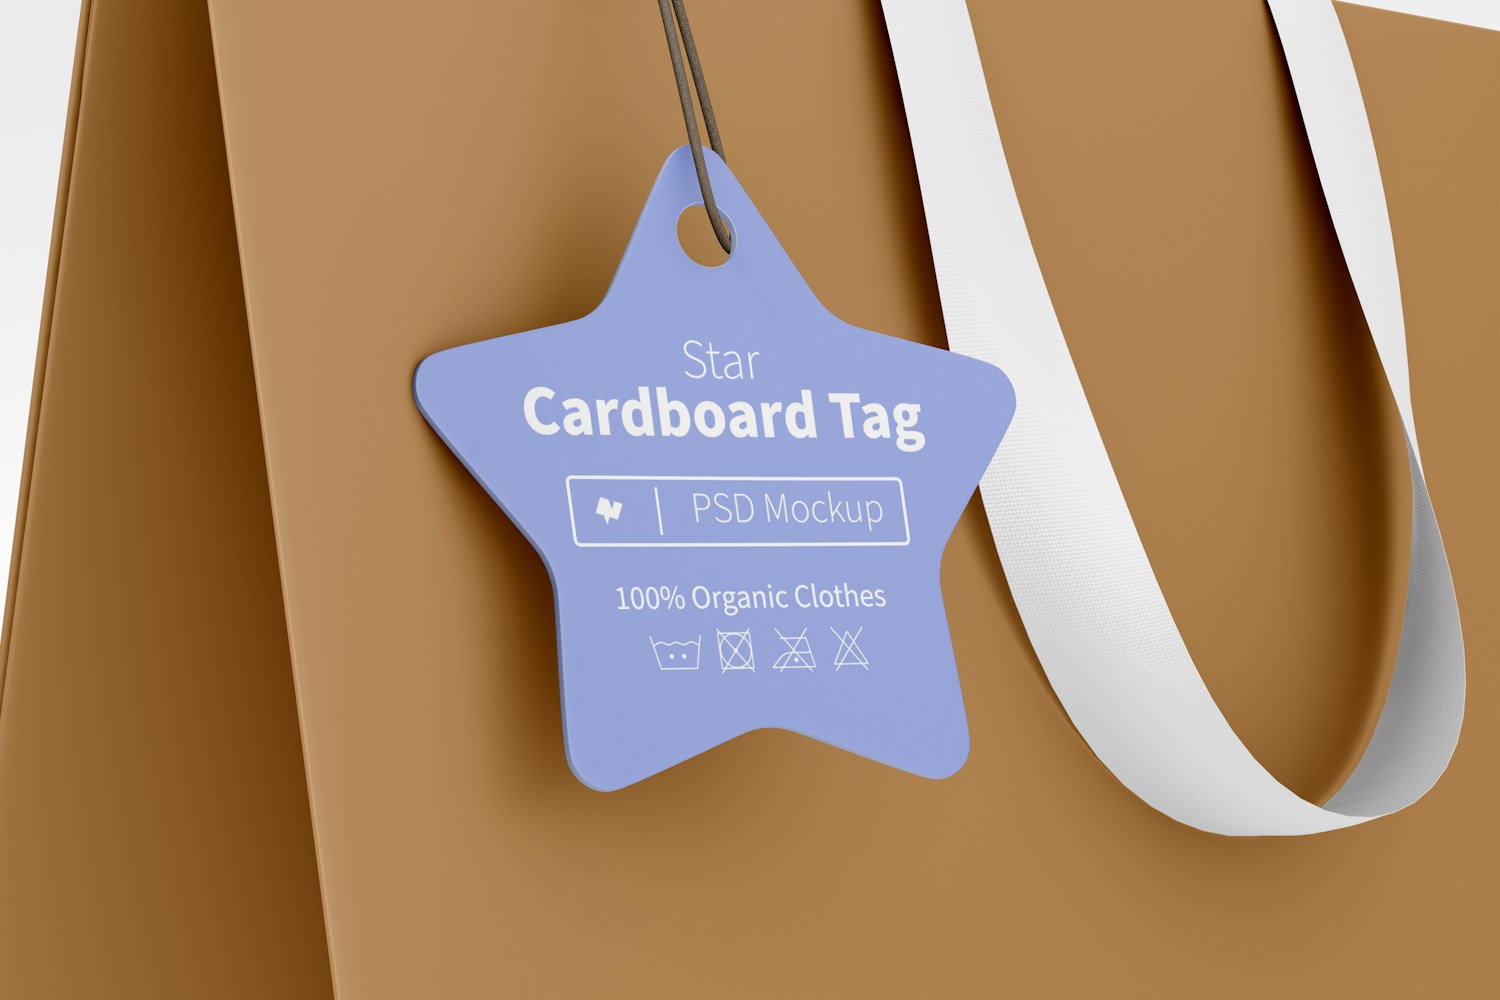 Star Cardboard Tag on Bag Mockup